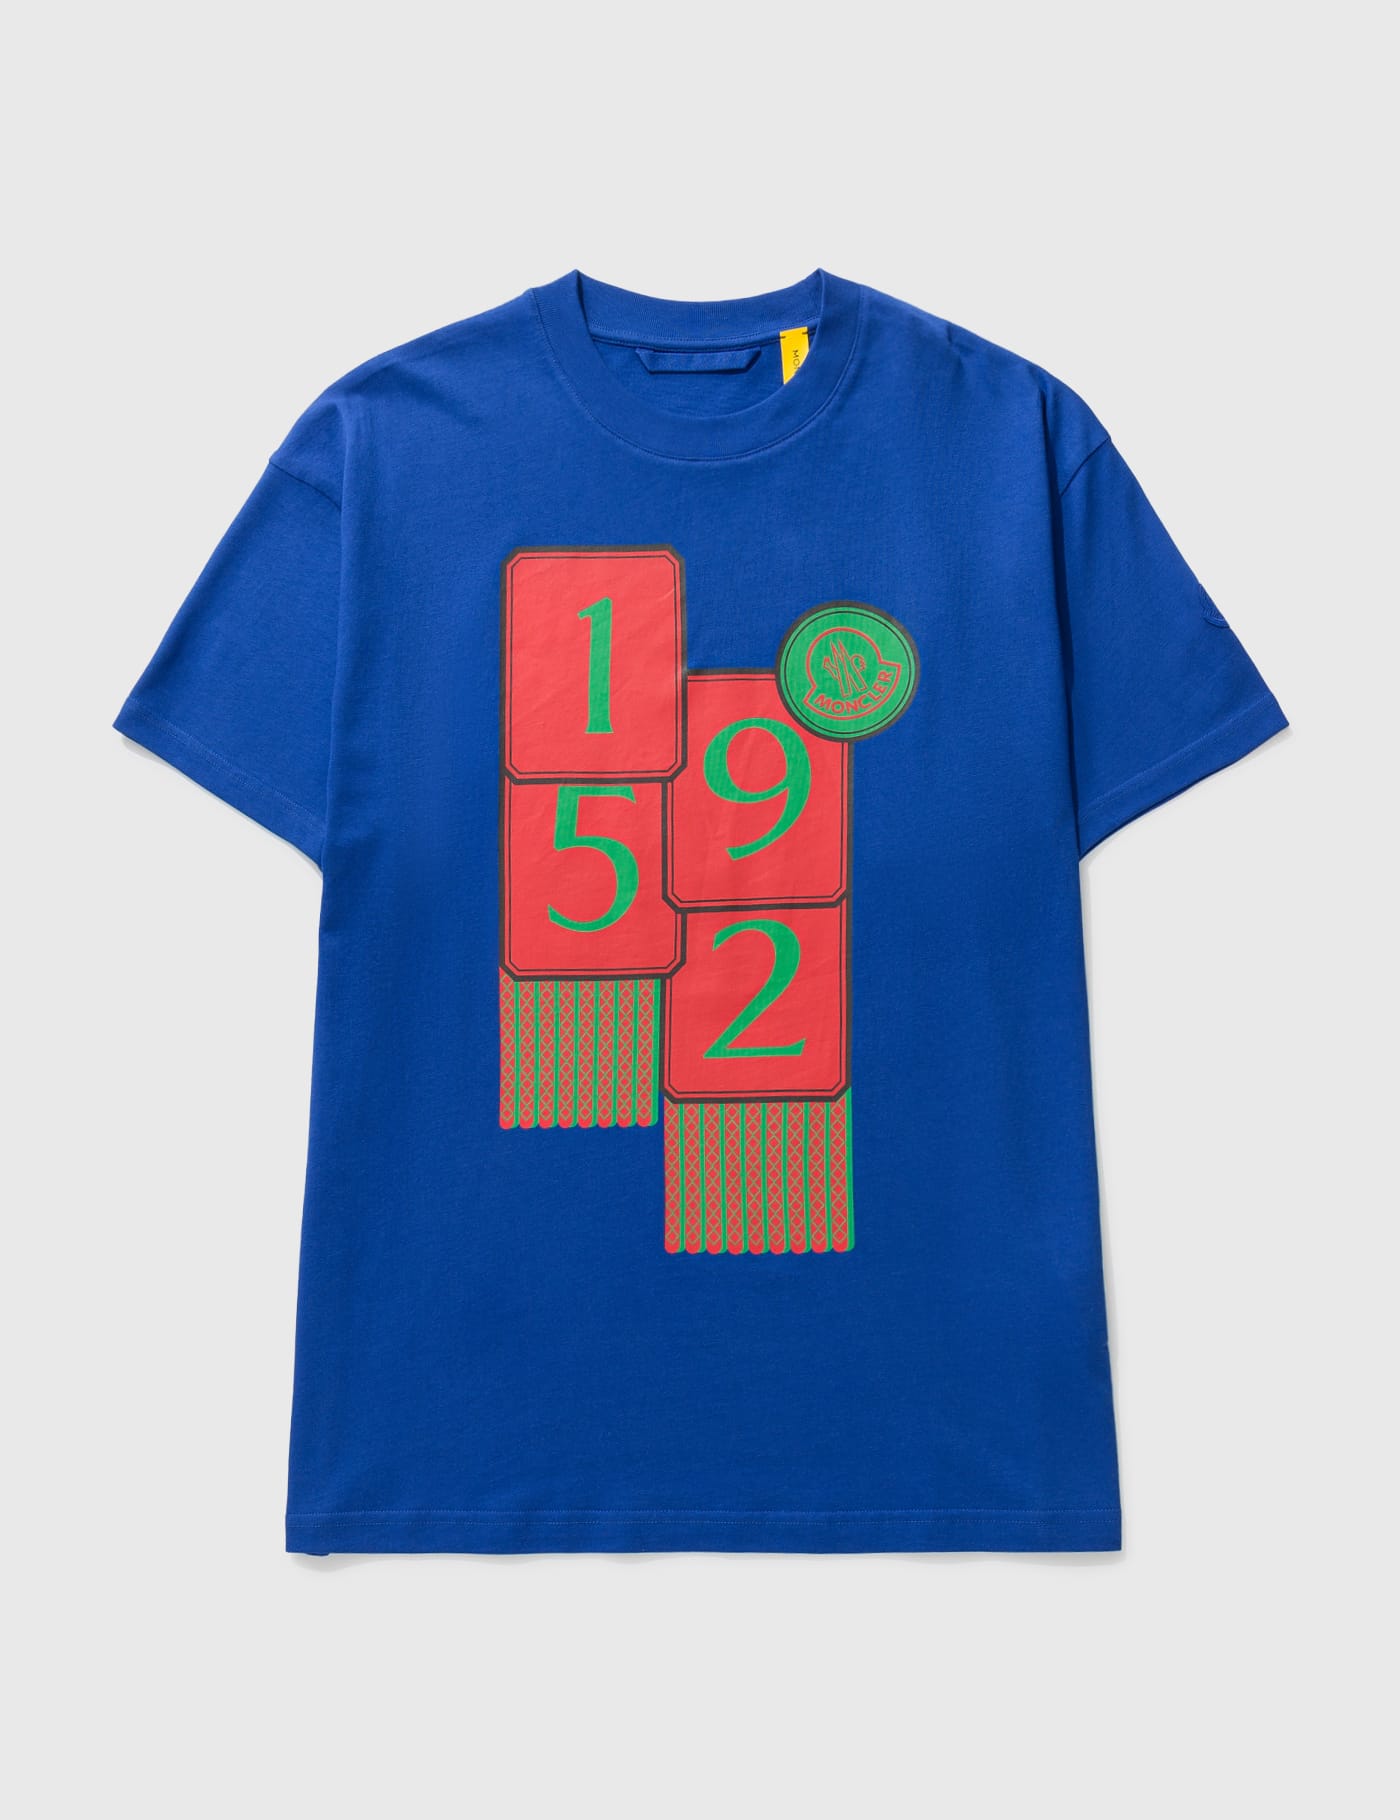 Moncler Genius - 2 Moncler 1952 T-shirt | HBX - Globally Curated